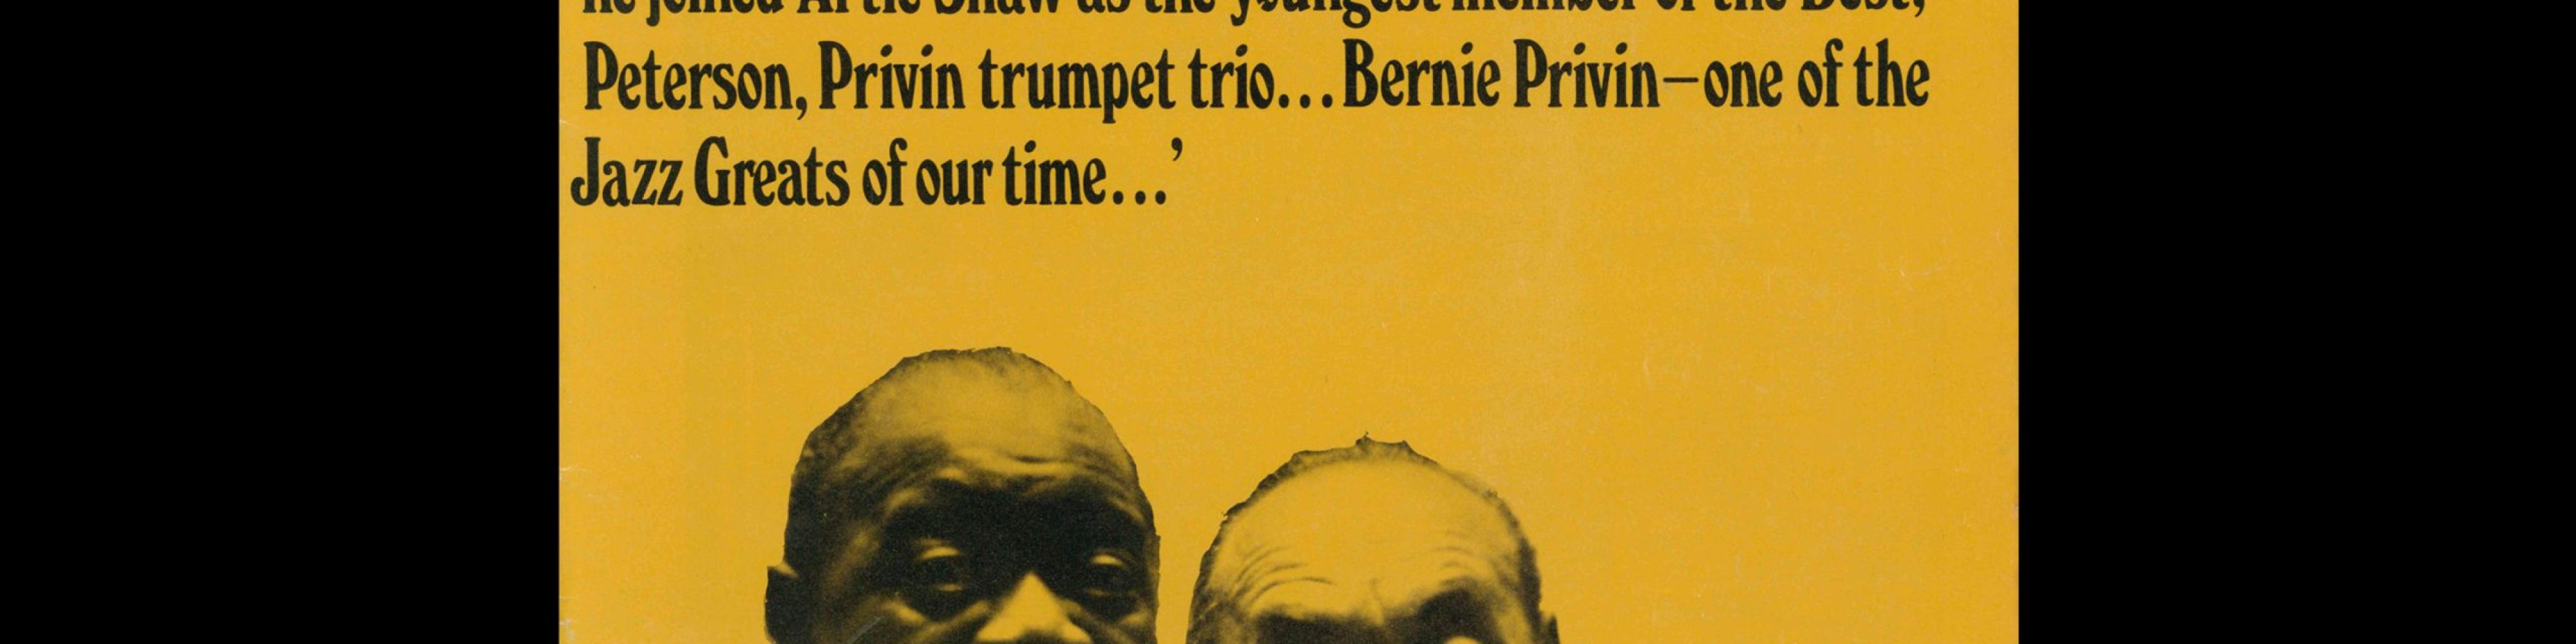 Jazz Journal, 4, 1974